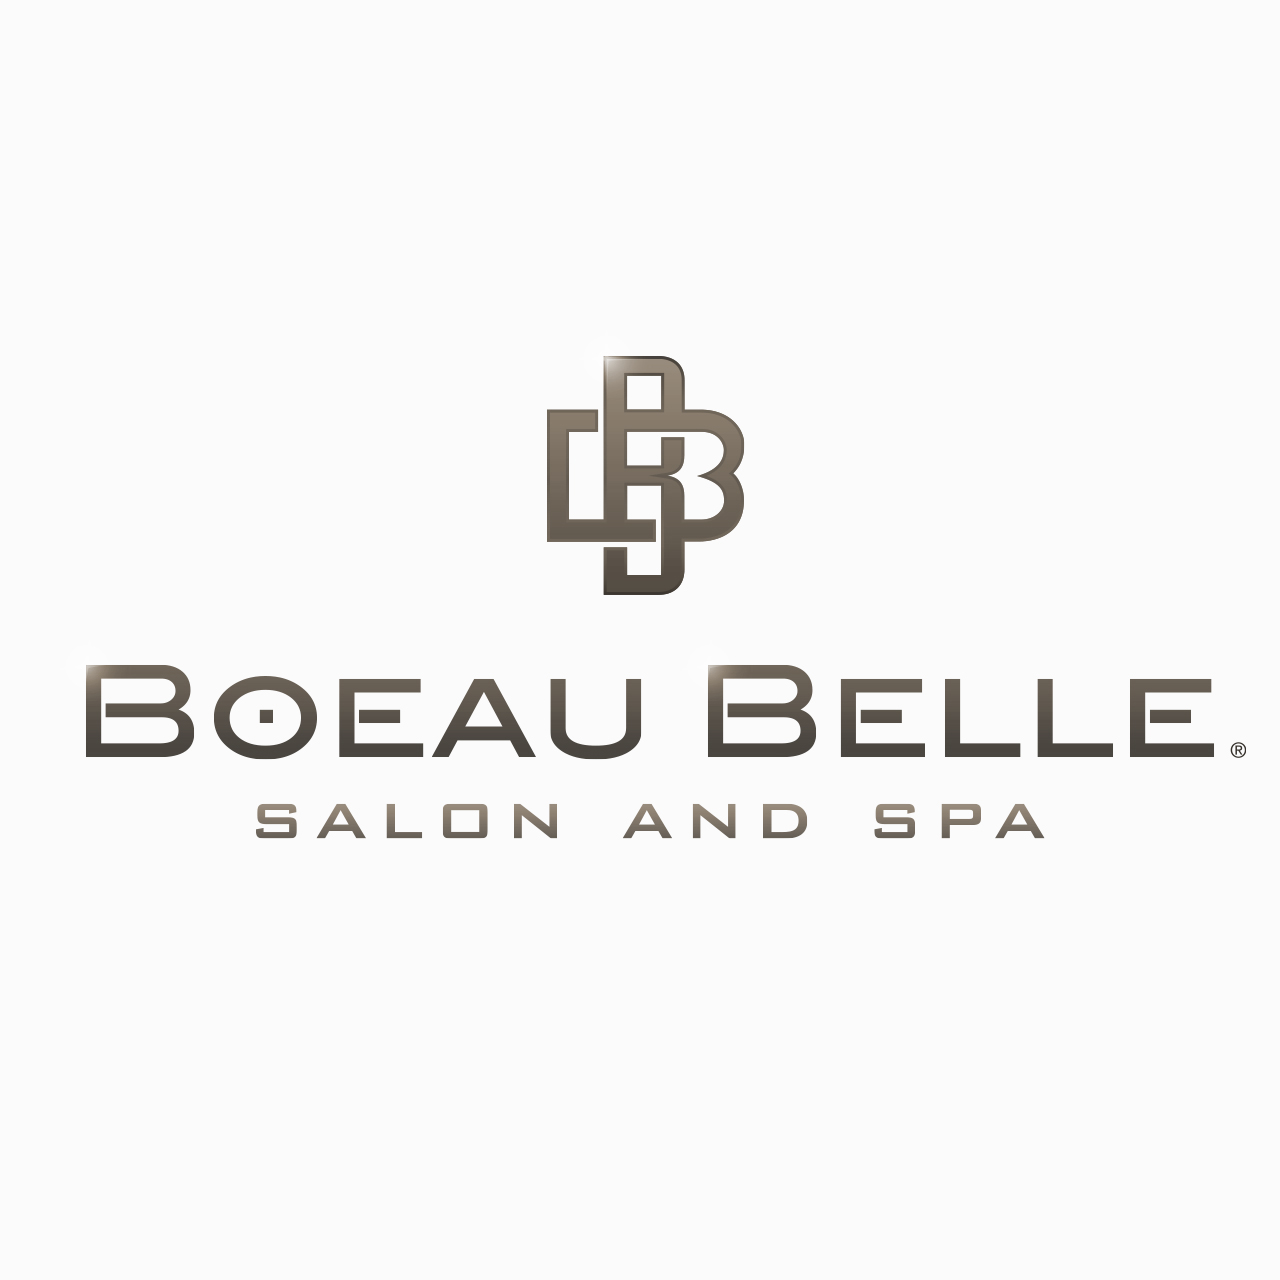 Logo design for Boeau Belle Salon and Spa